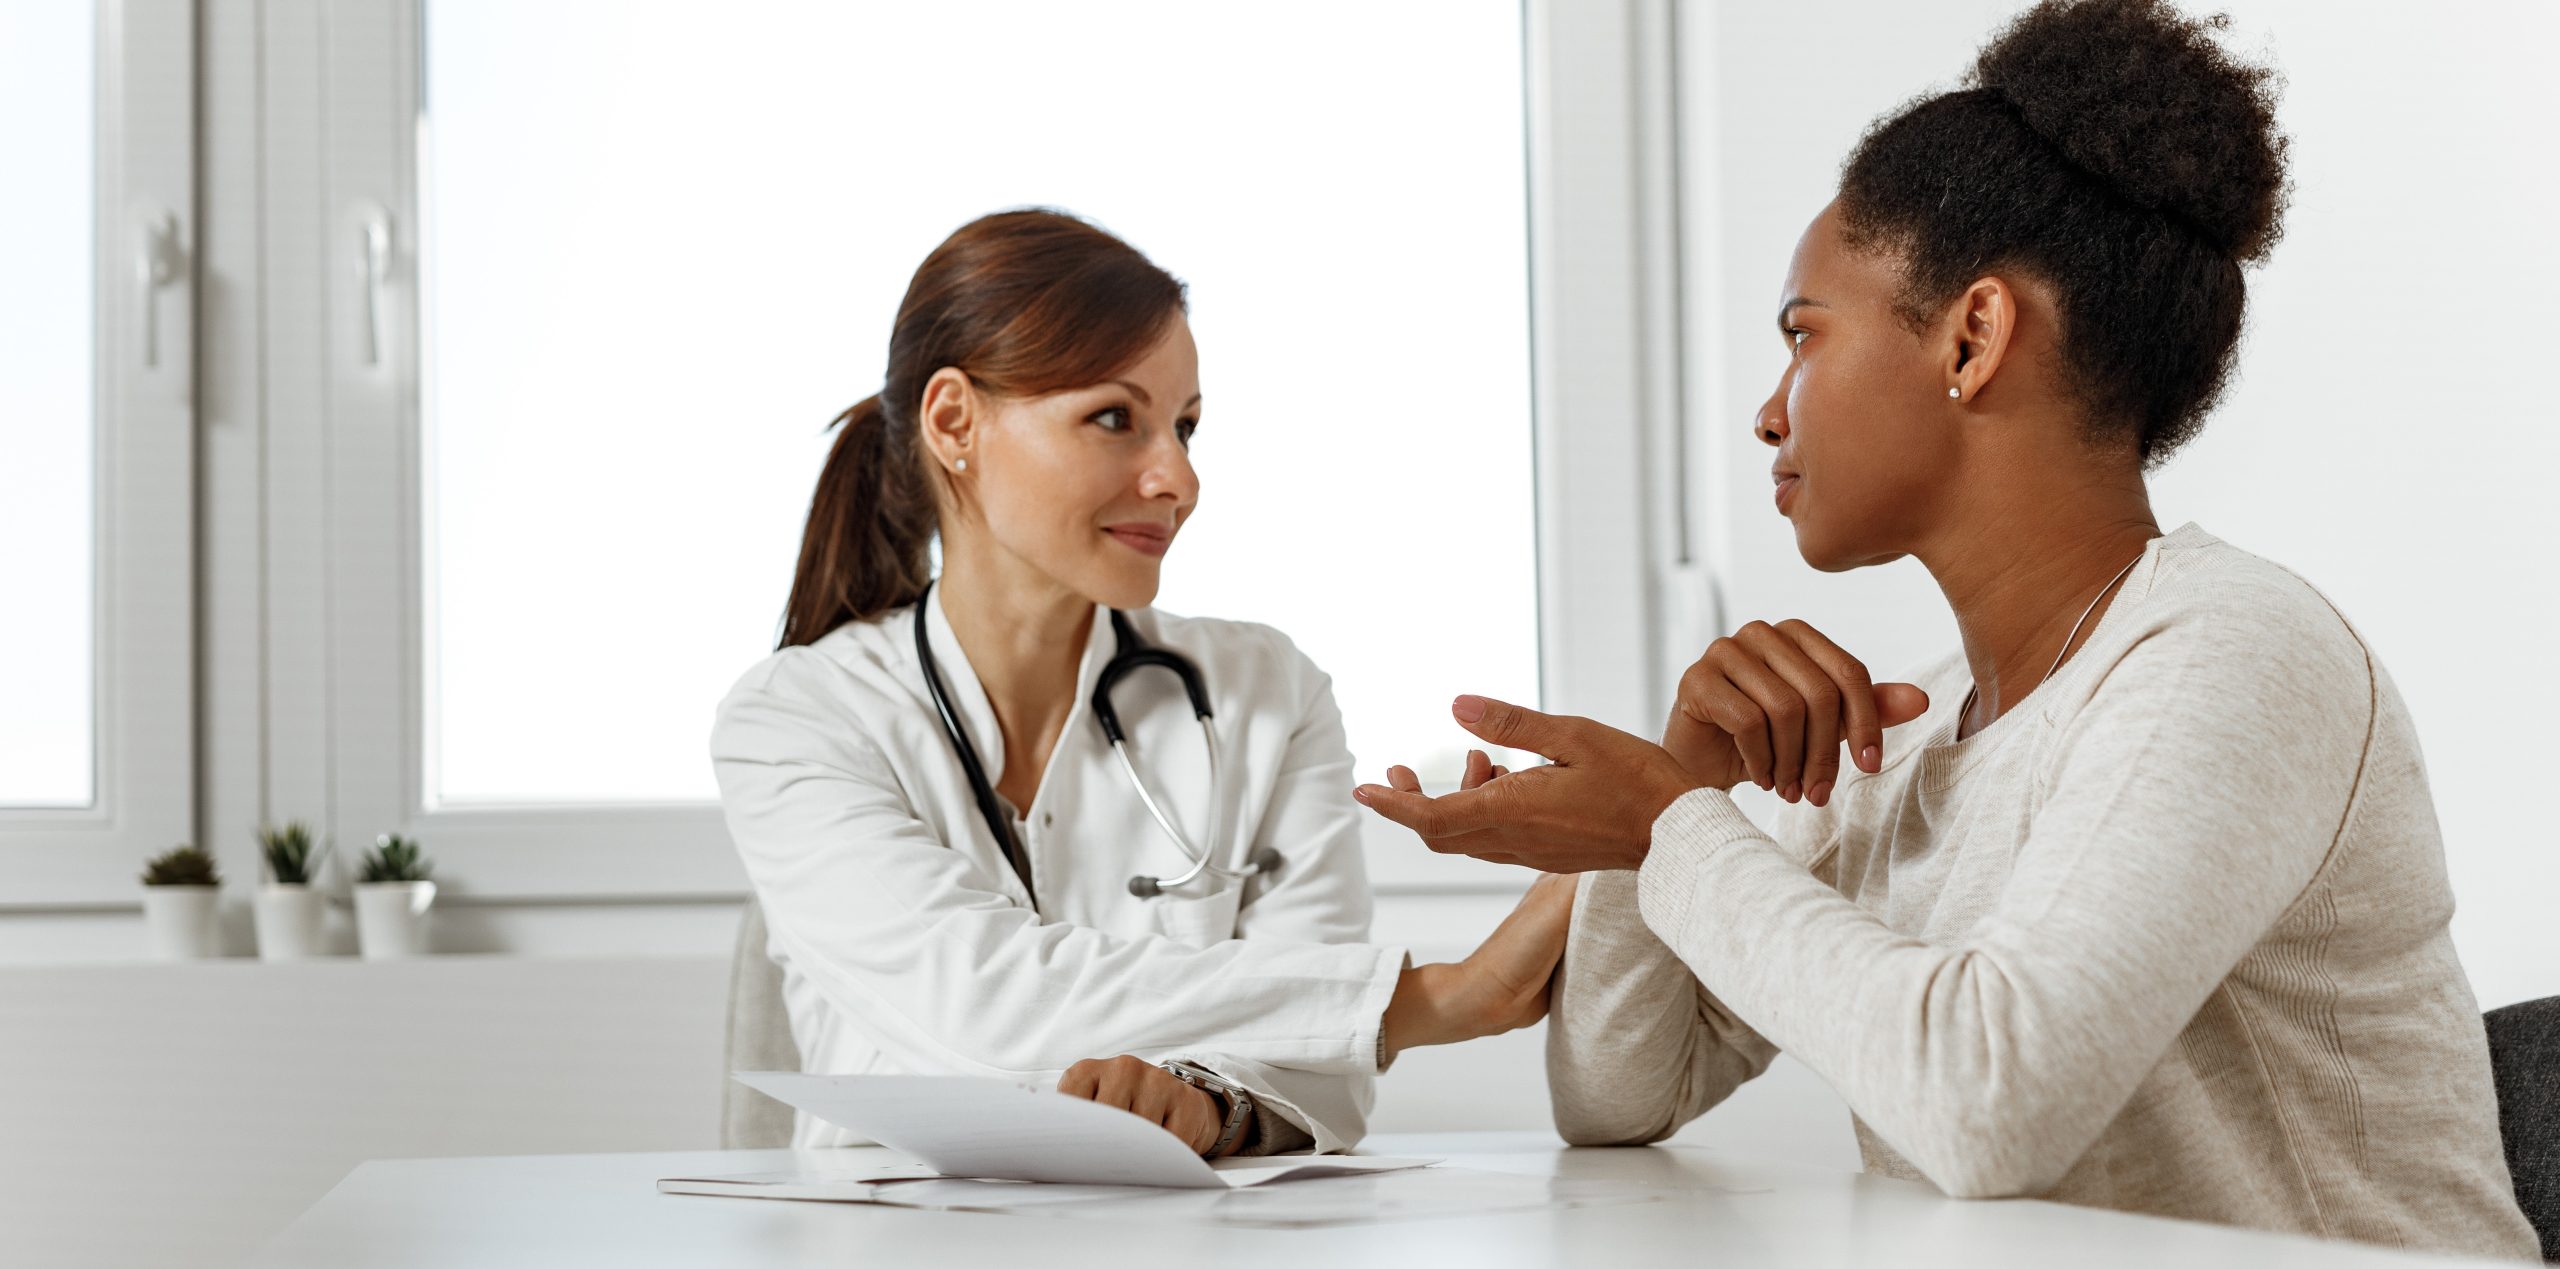 femme discutant avec un médecin